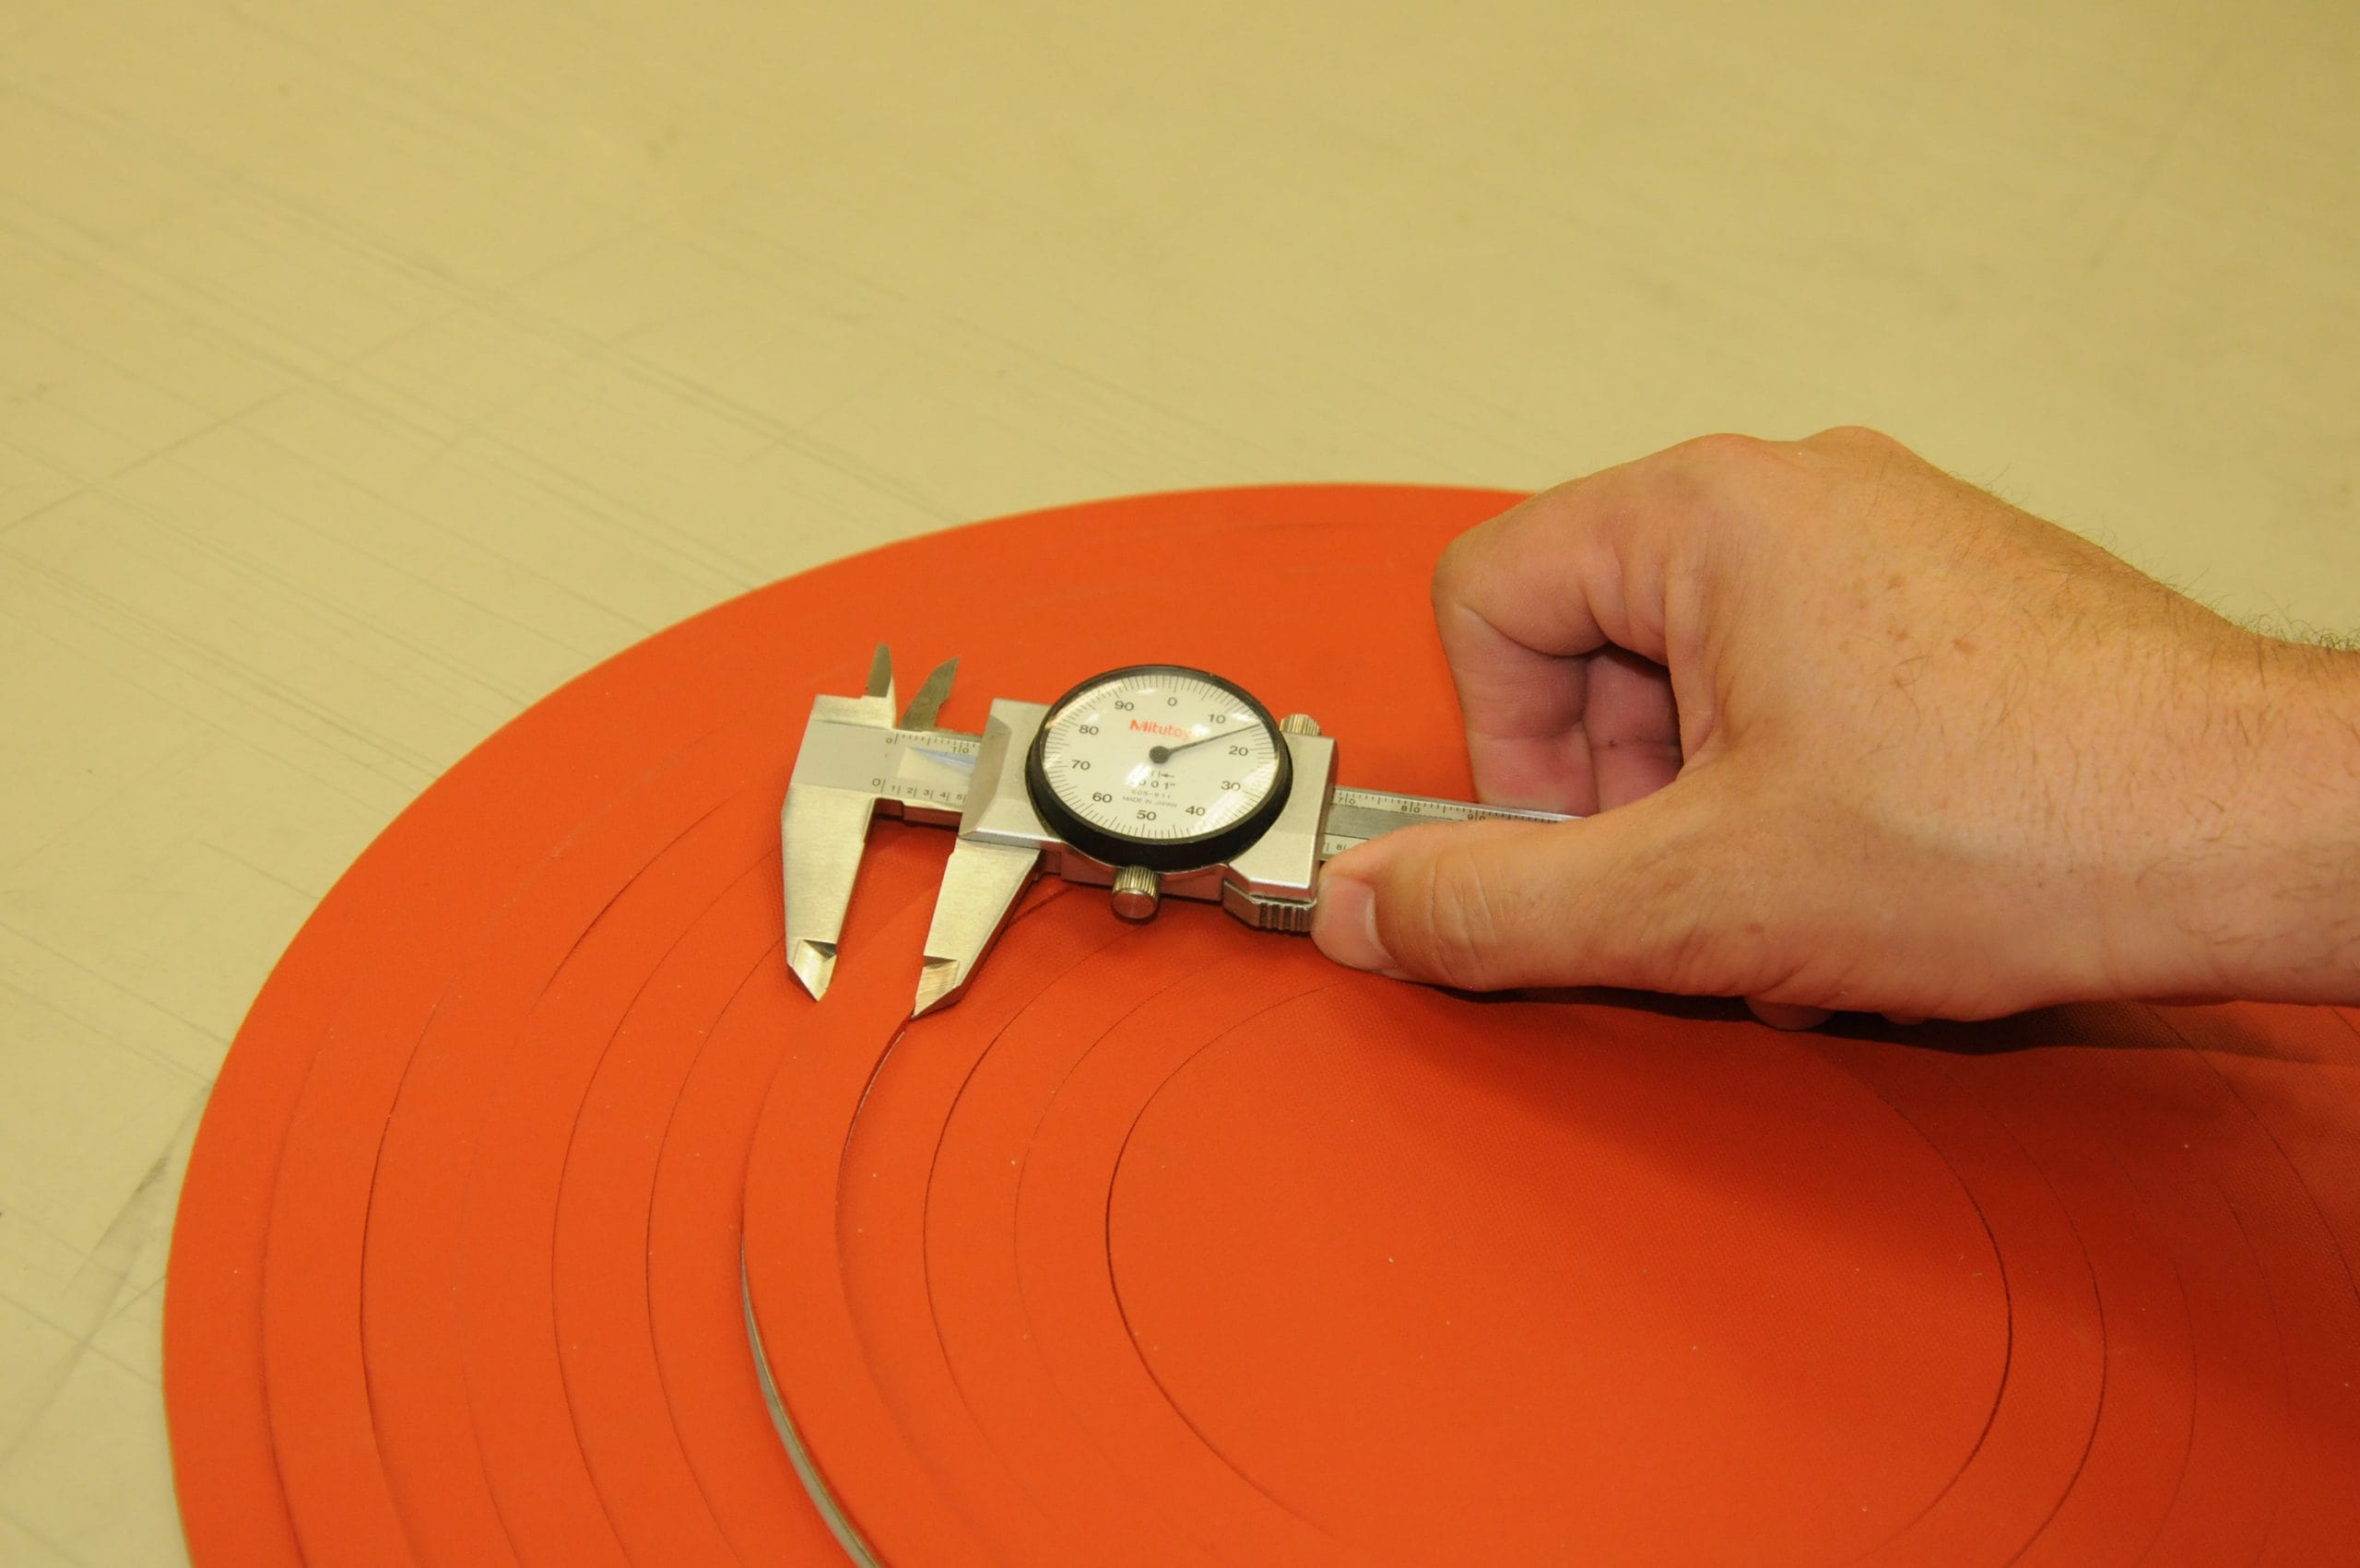 Measuring durometer of tubing with durometer gauge